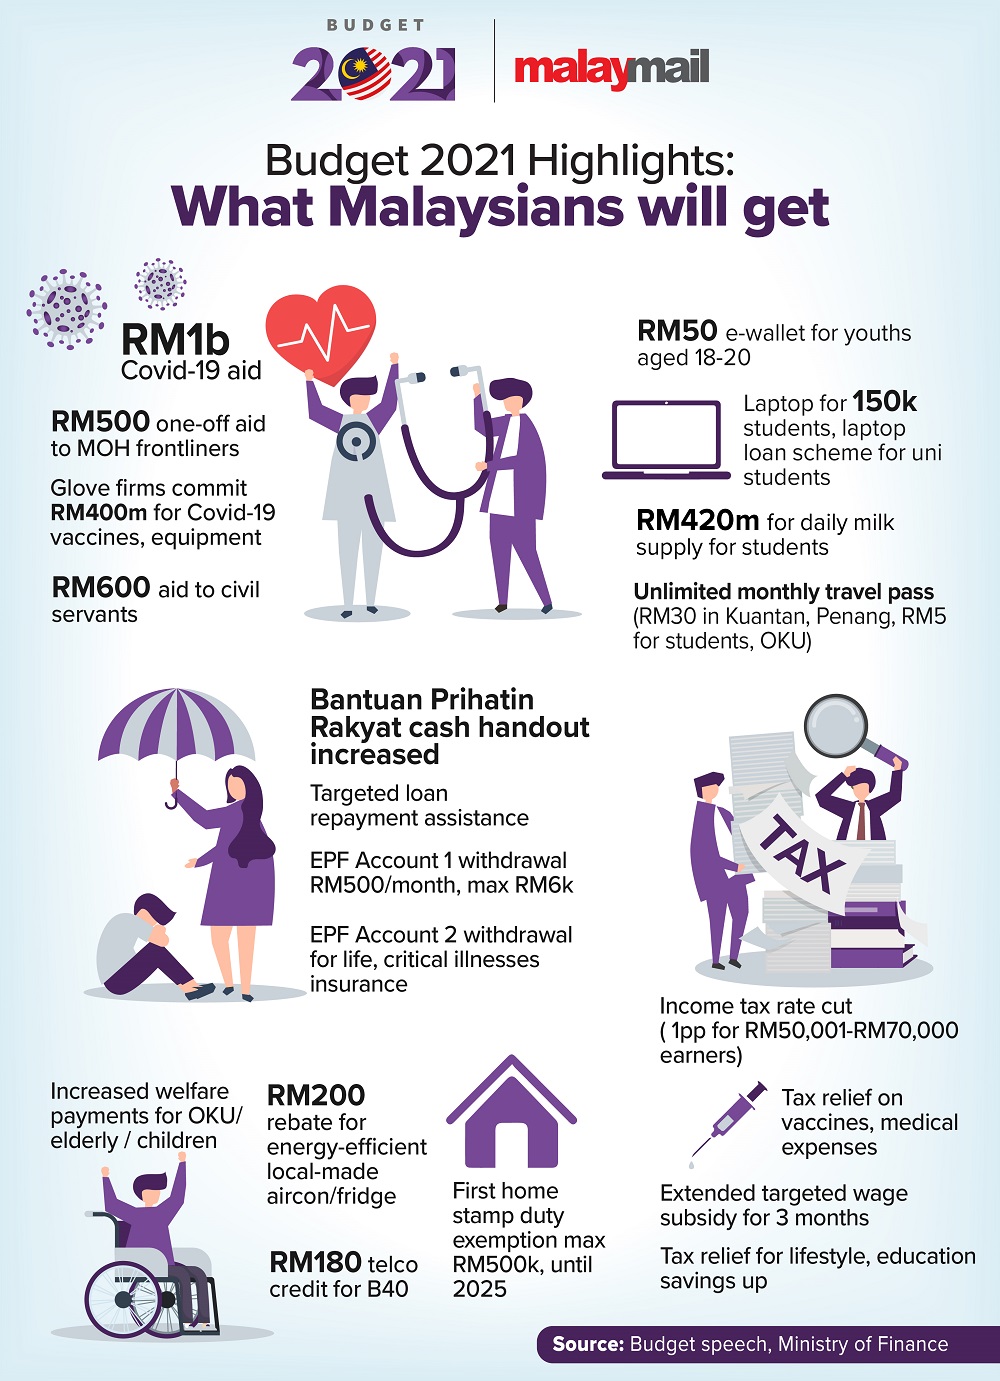 Income tax relief 2022 malaysia